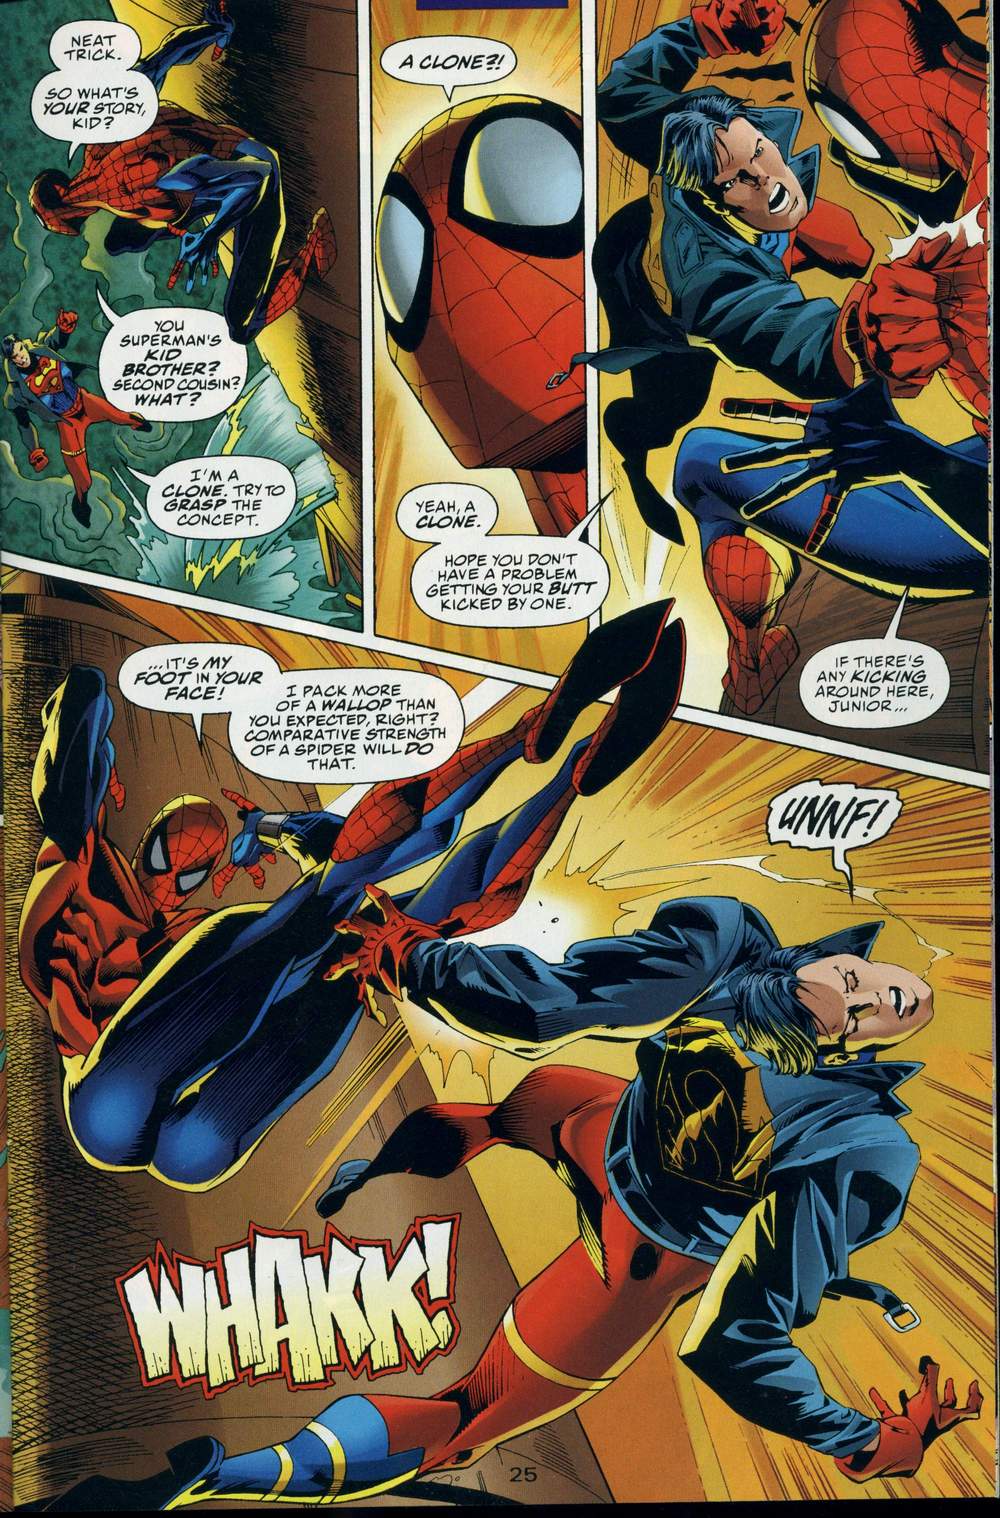 Dc Vs Marvel The Amazing Spider Man Vs Superboy Lowbrowcomics Com